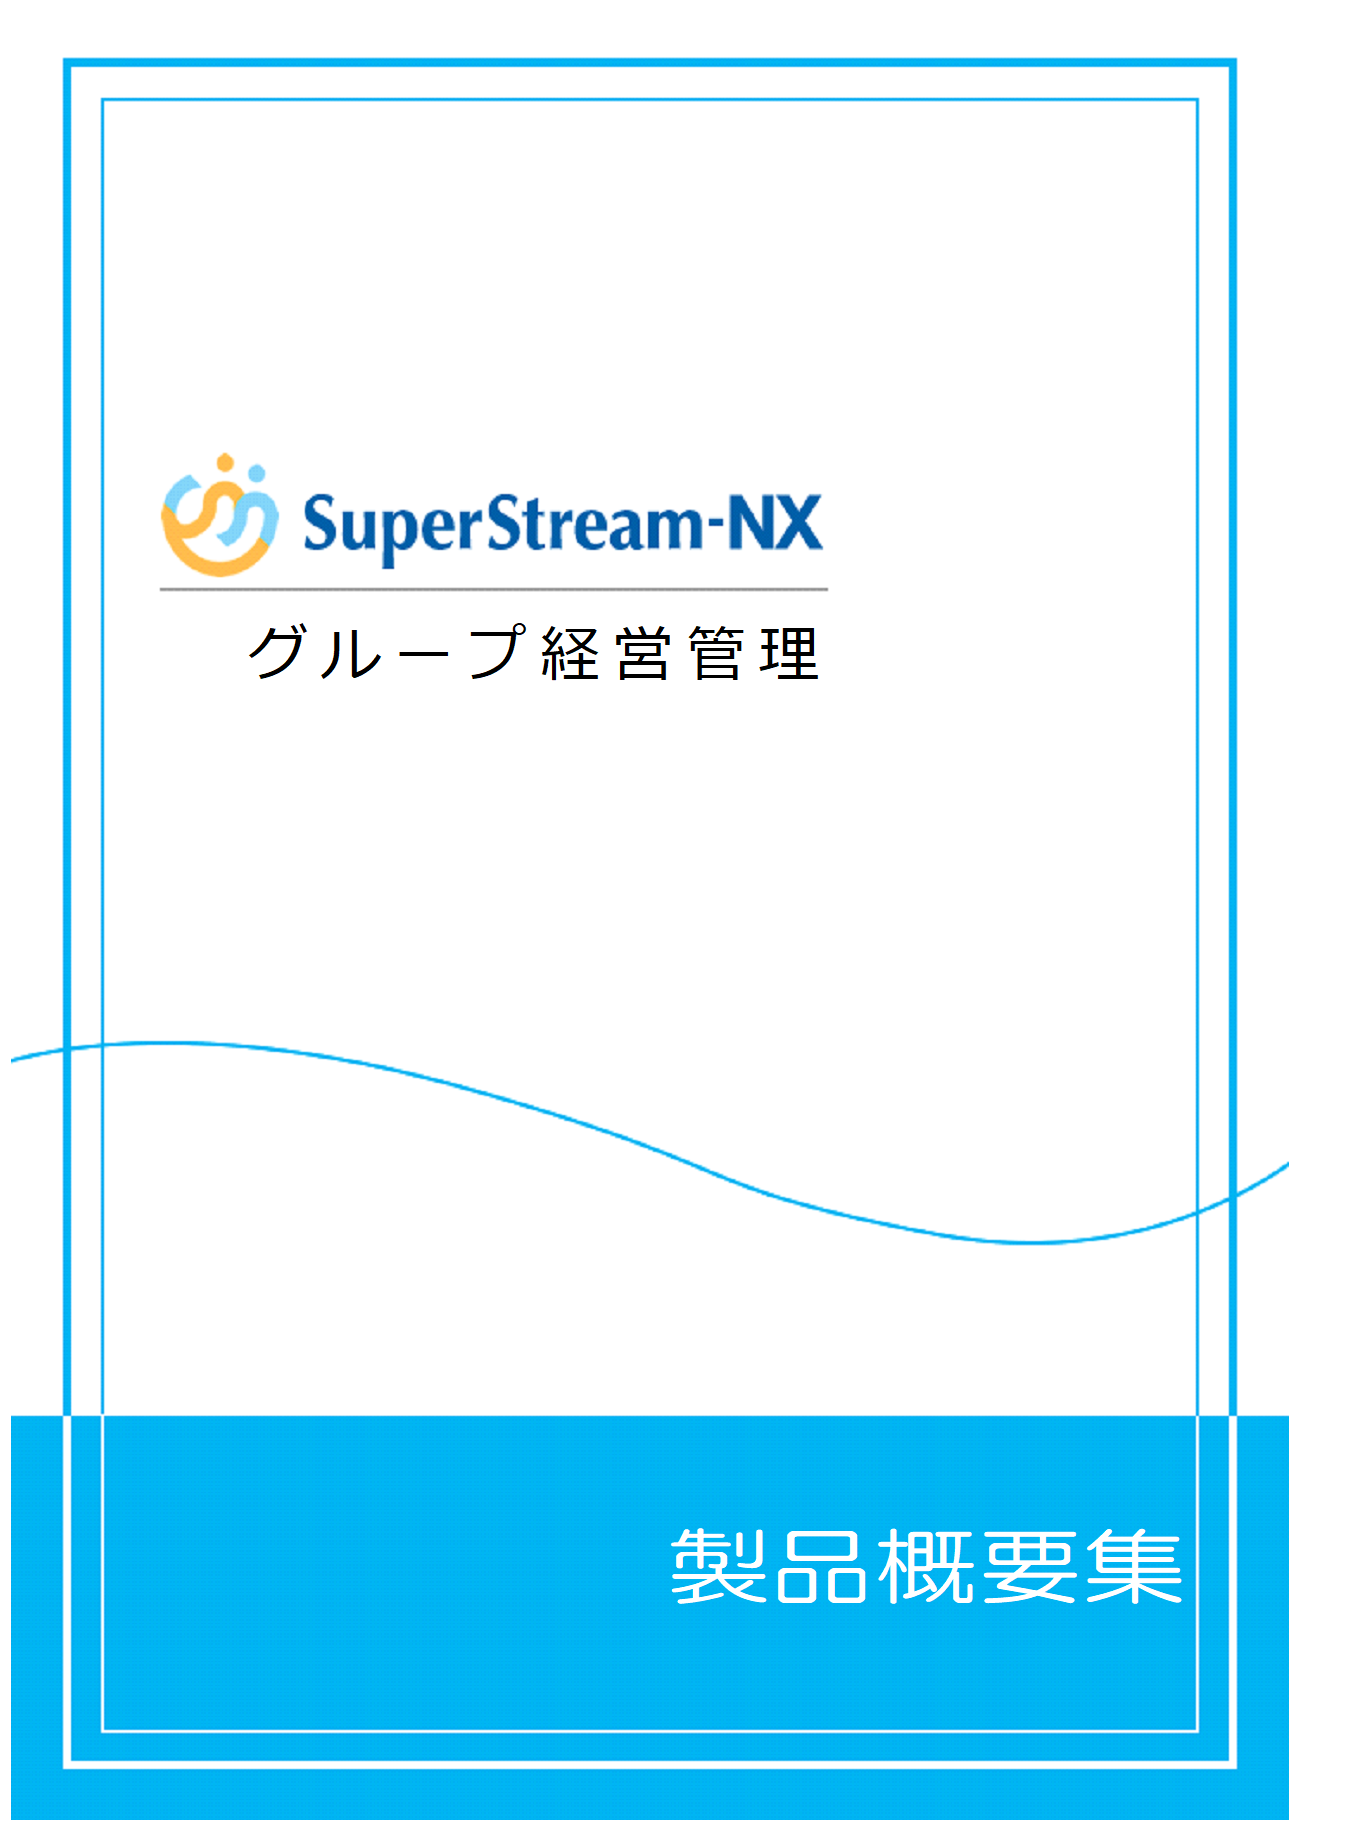 SuperStream-NX グループ経営管理製品概要集